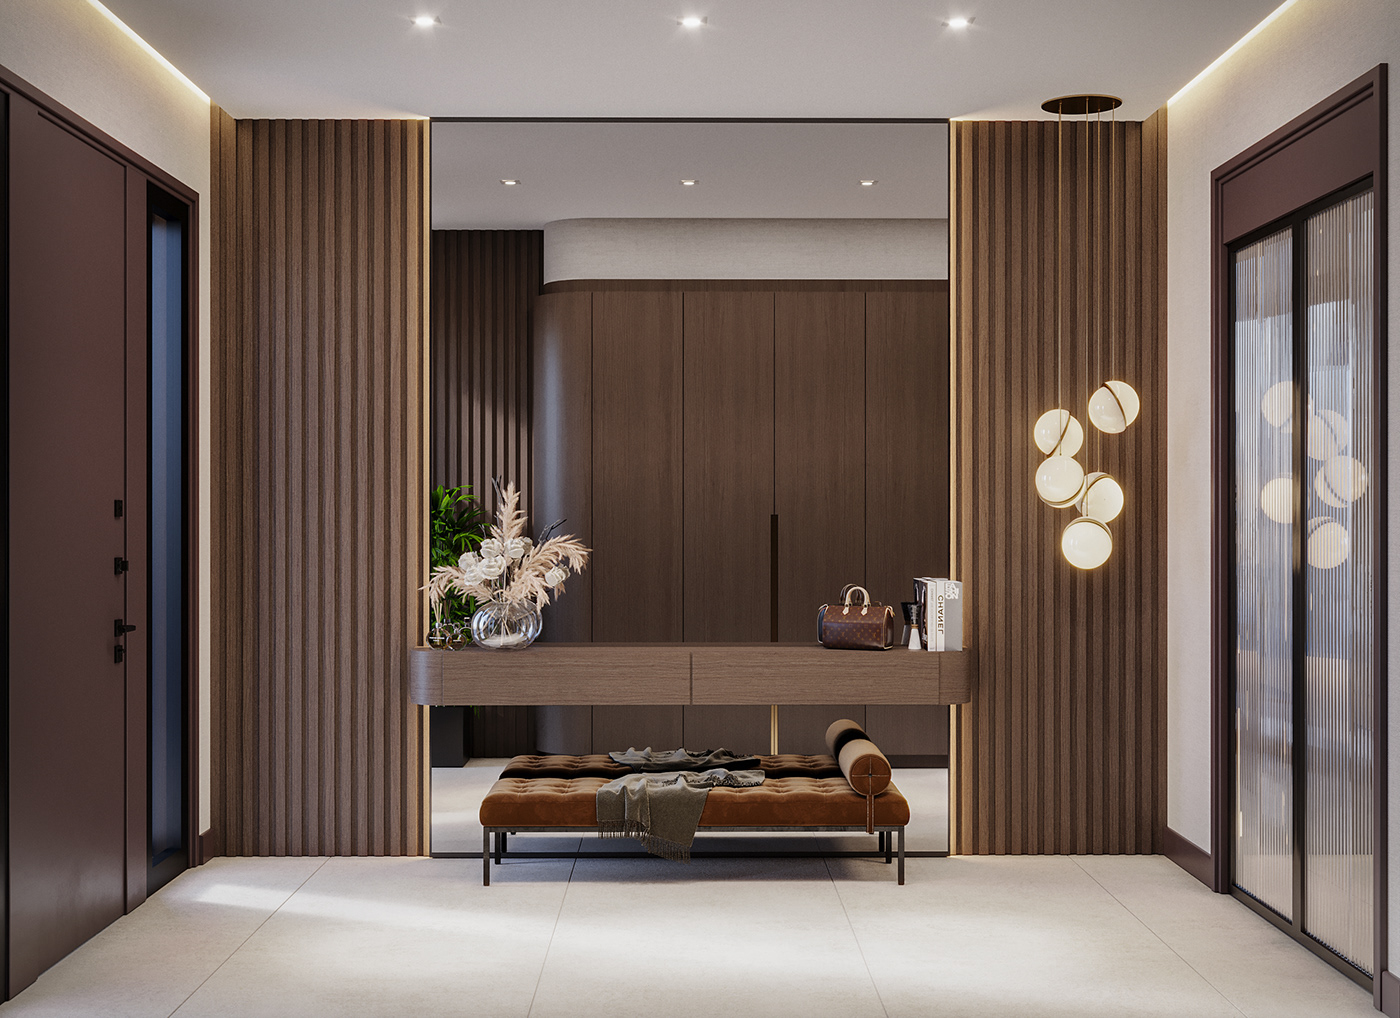 hallway villa entrance Entrance Interior architecture Render visualization 3D 3ds max corona